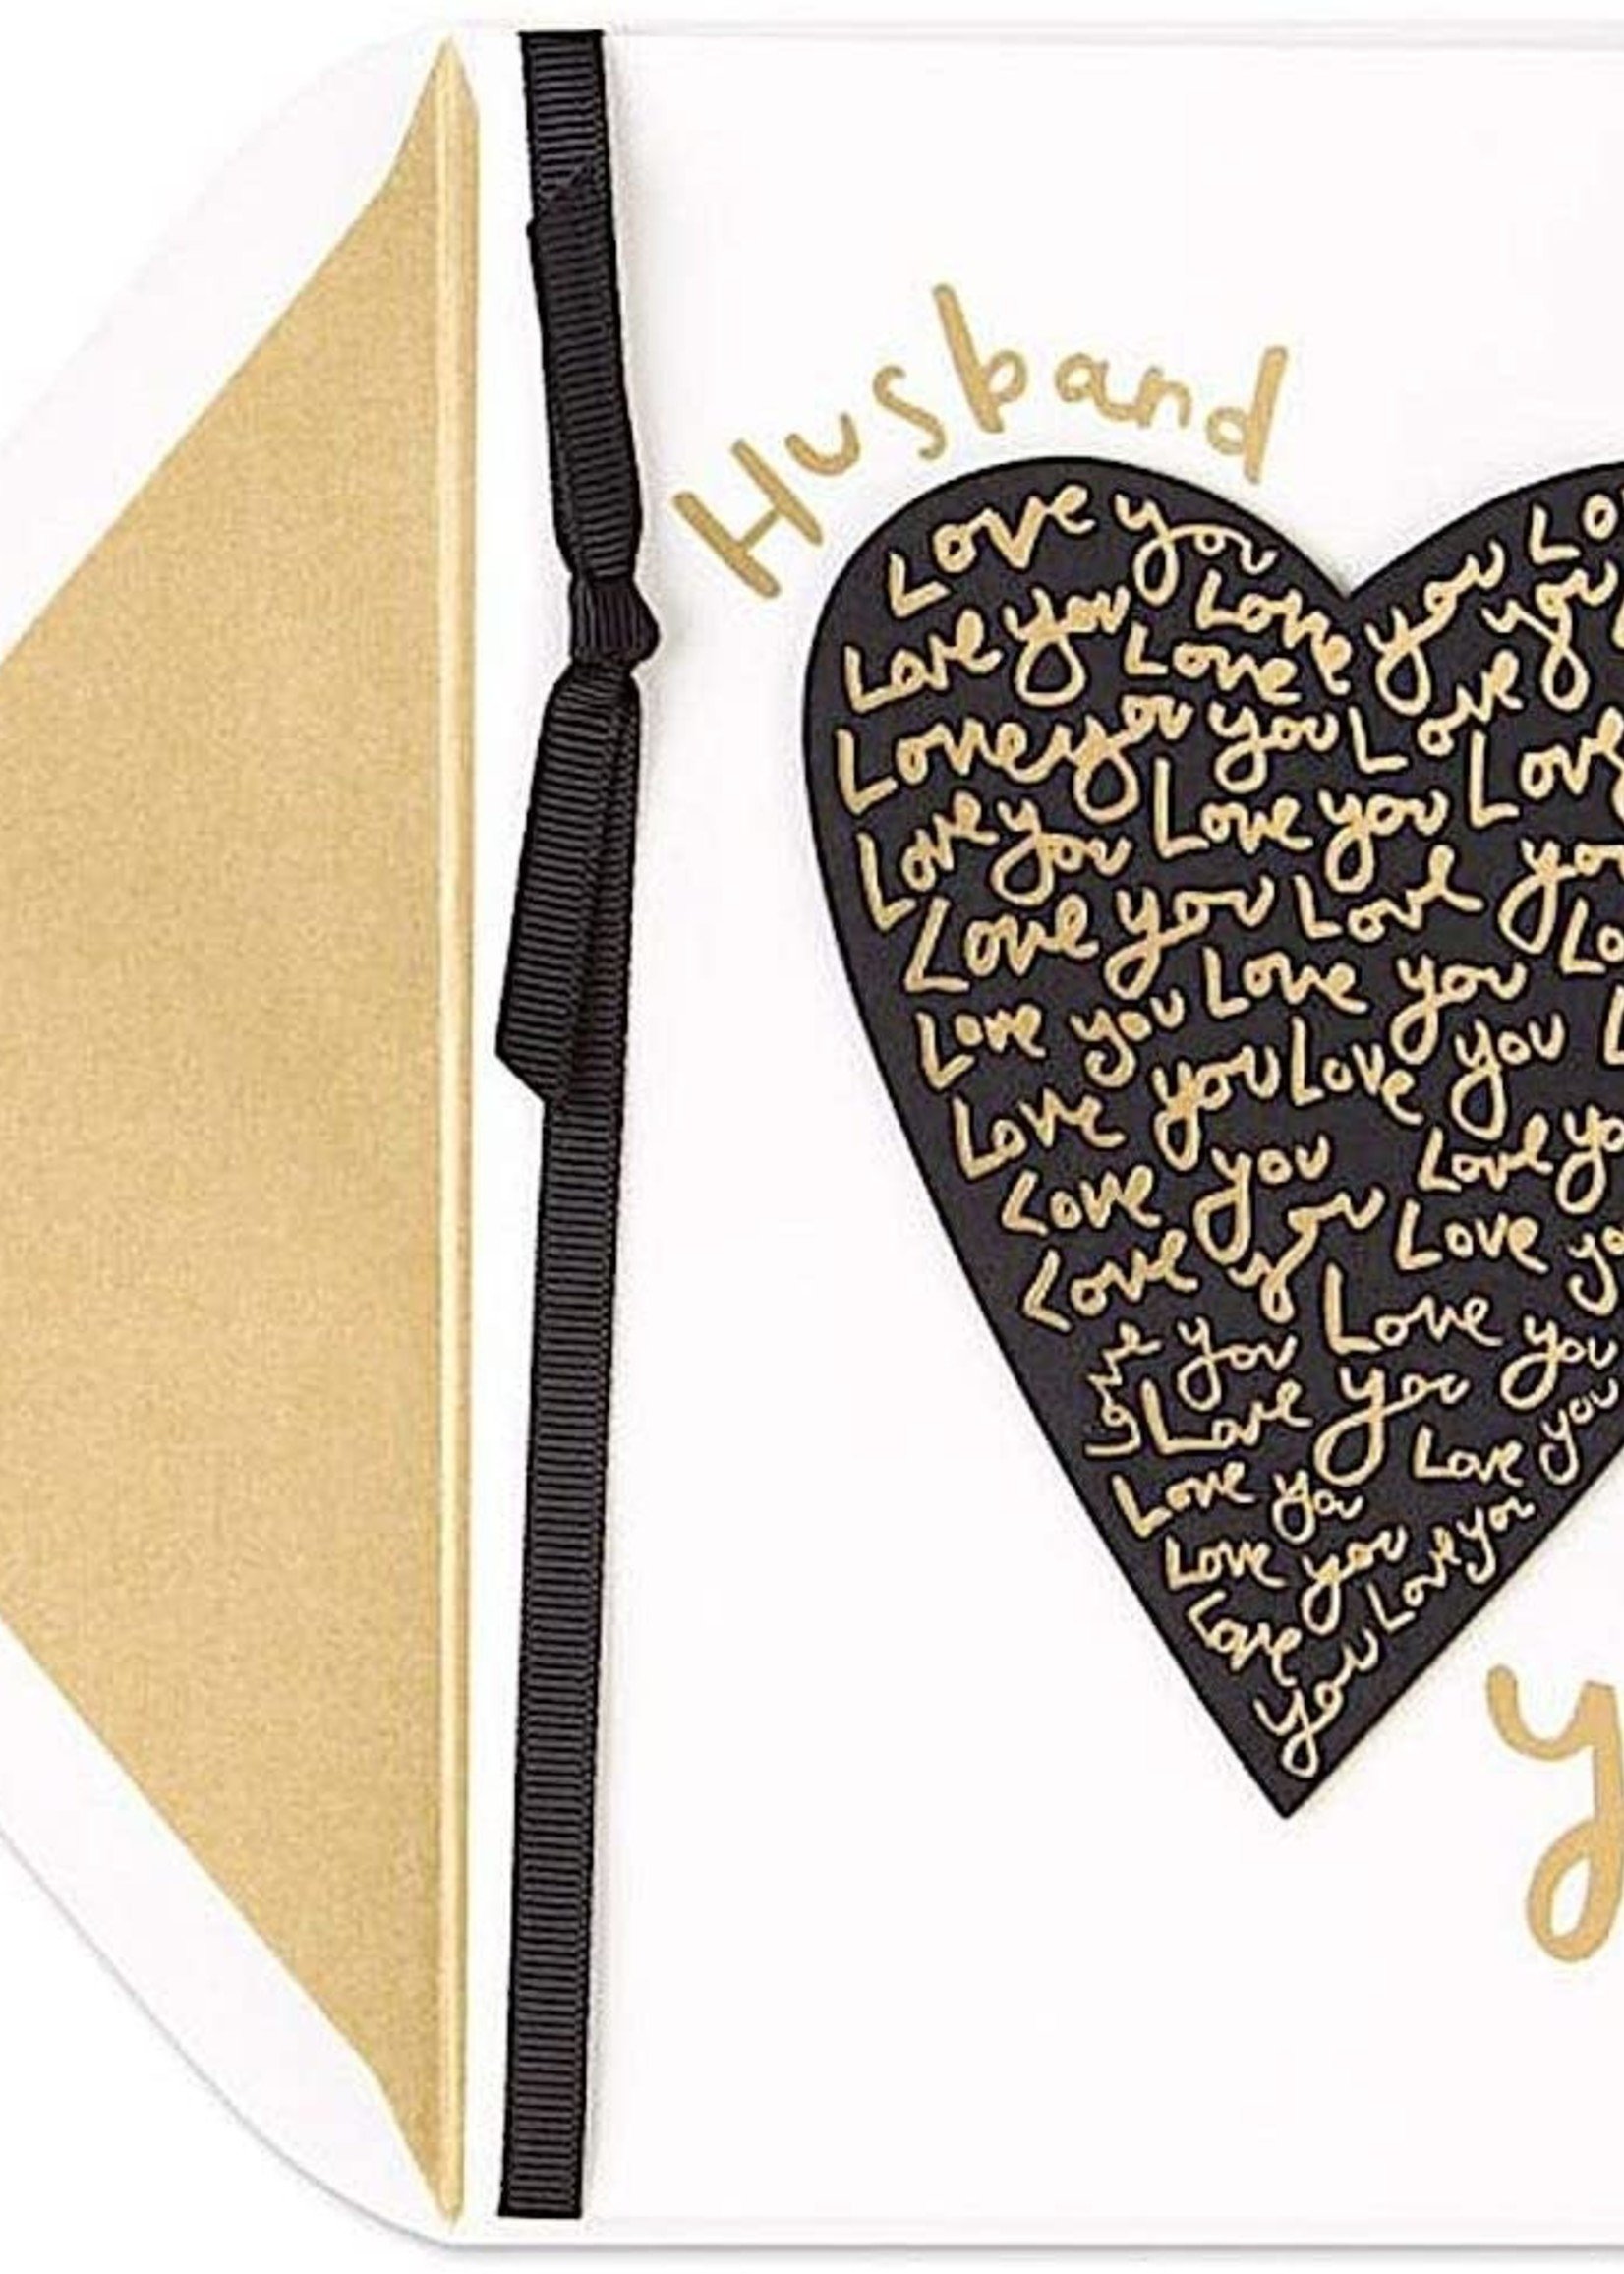 Card Vday Husband: Love You, Love You